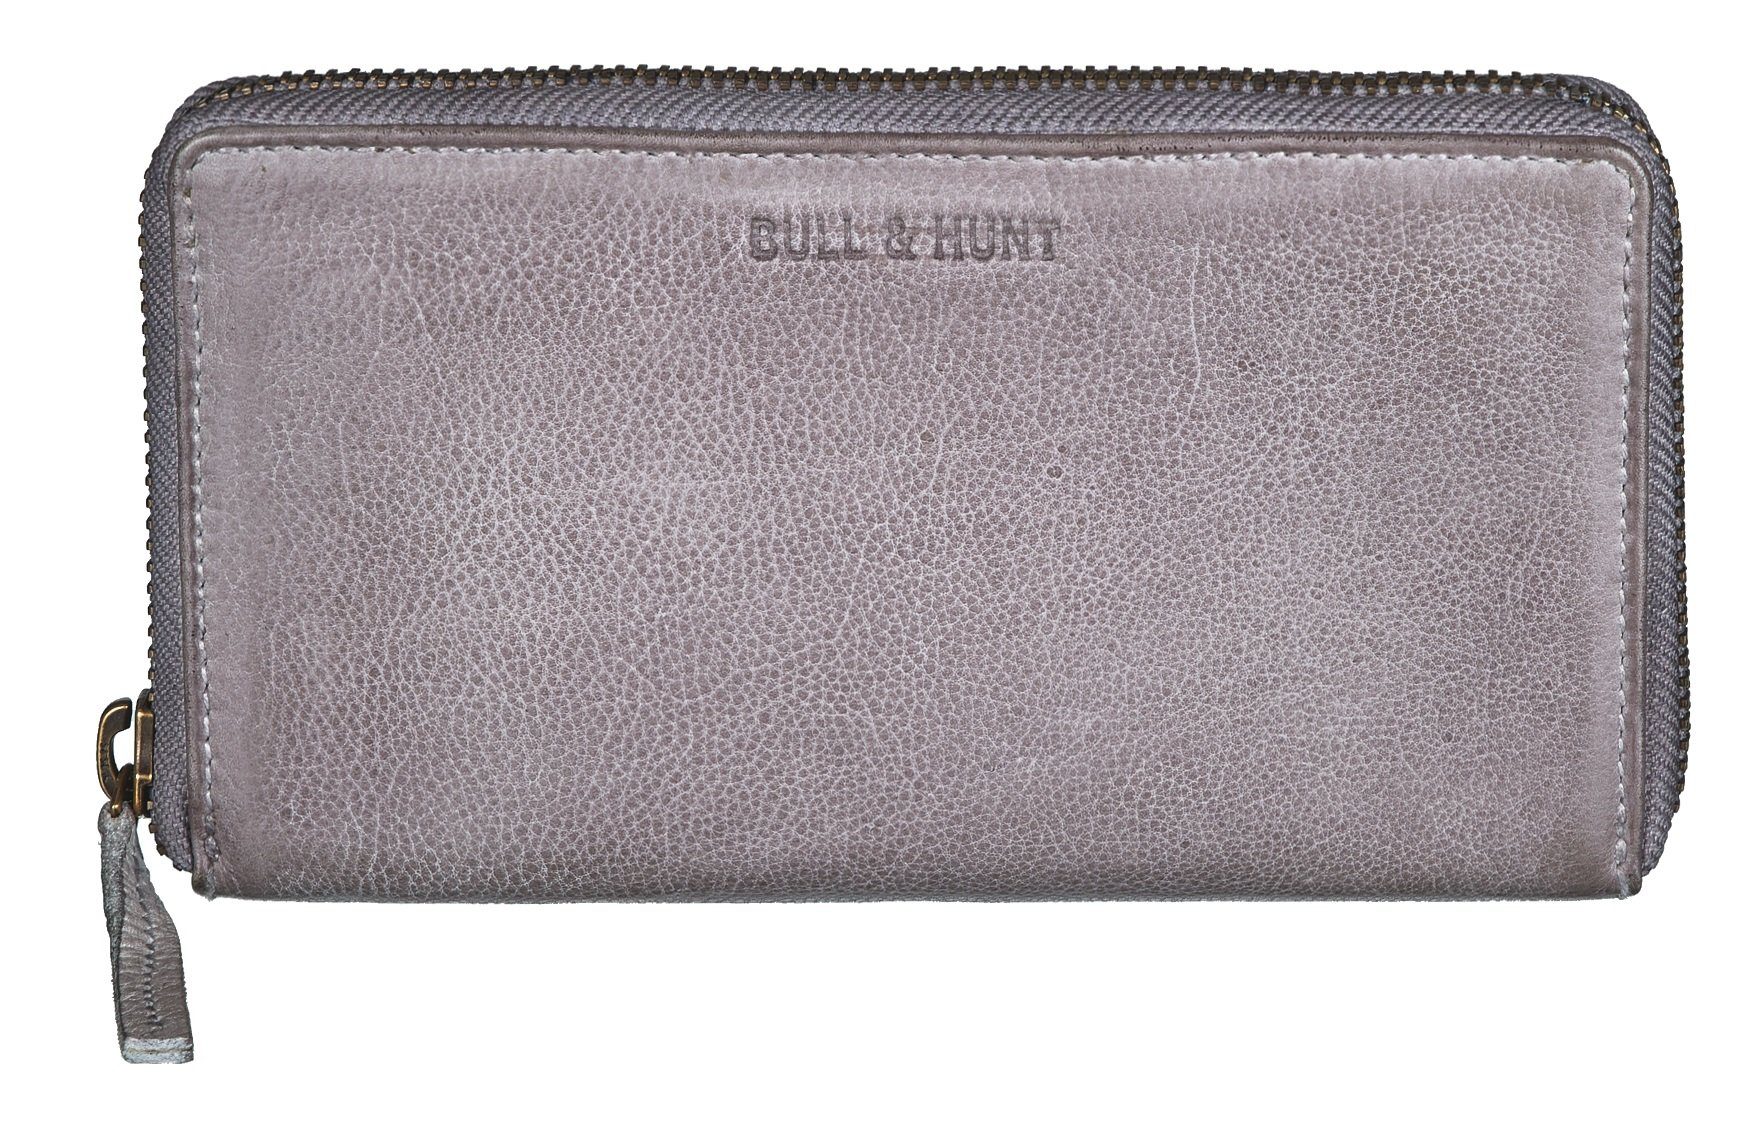 Bull & Hunt Geldbörse large zip wallet steel grey